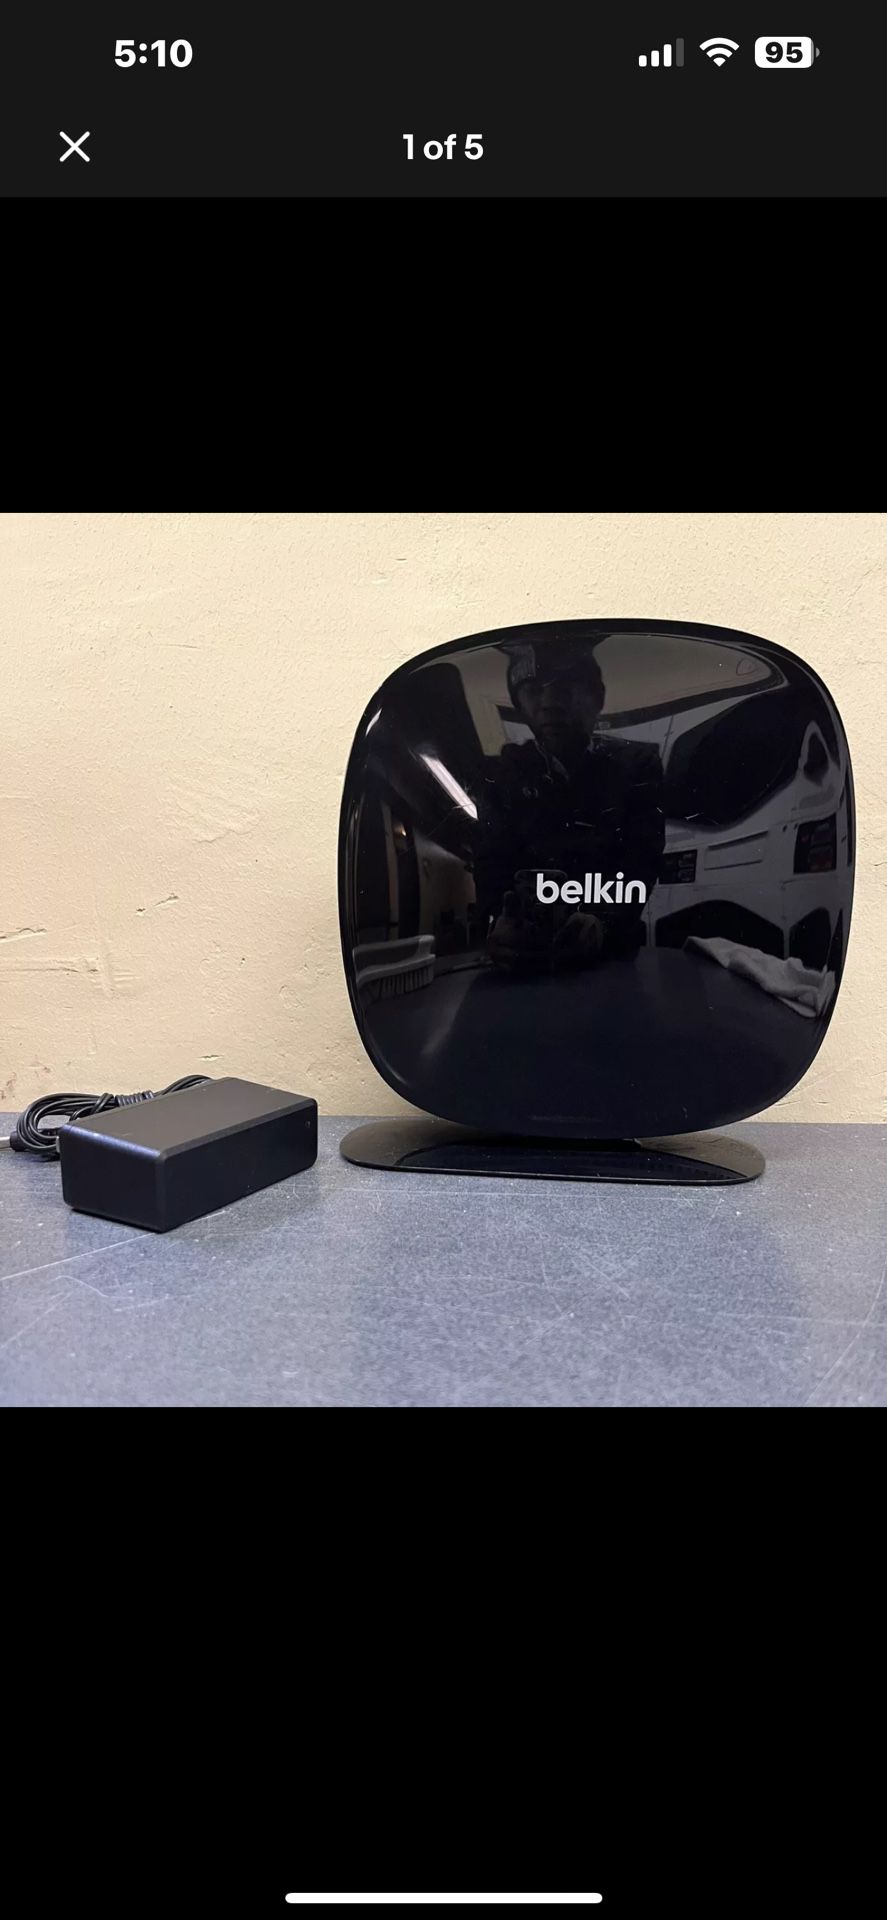 Belkin N750 900 Mbps 4-Port Gigabit Wireless N Router (F9K1110) Tested*